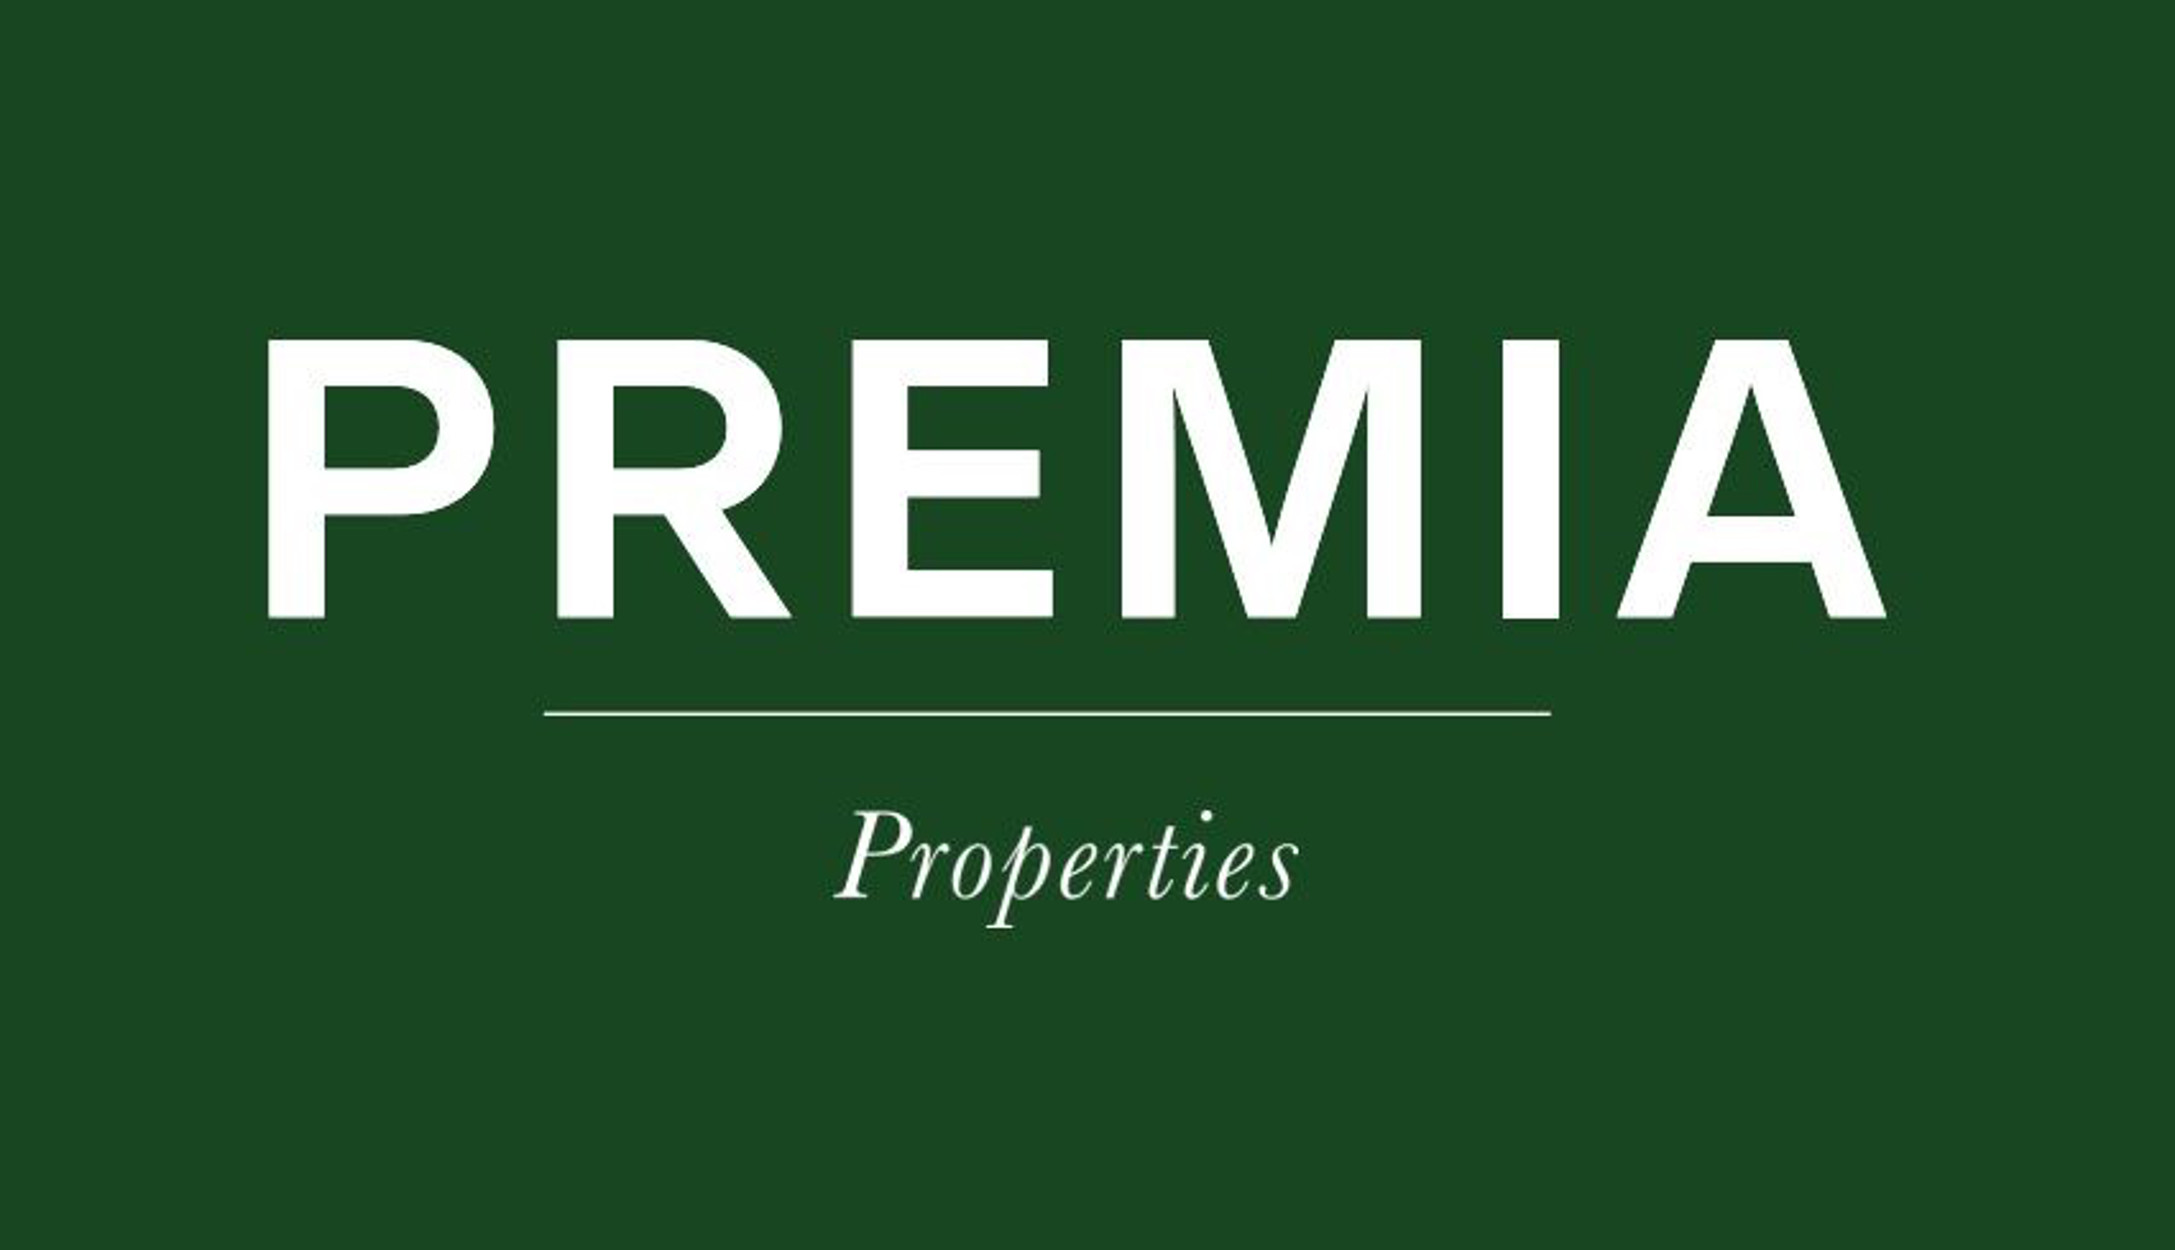 Premia Properties: Νέες επενδύσεις σε ακίνητα και ανοδική πορεία στο πρώτο τρίμηνο 2022